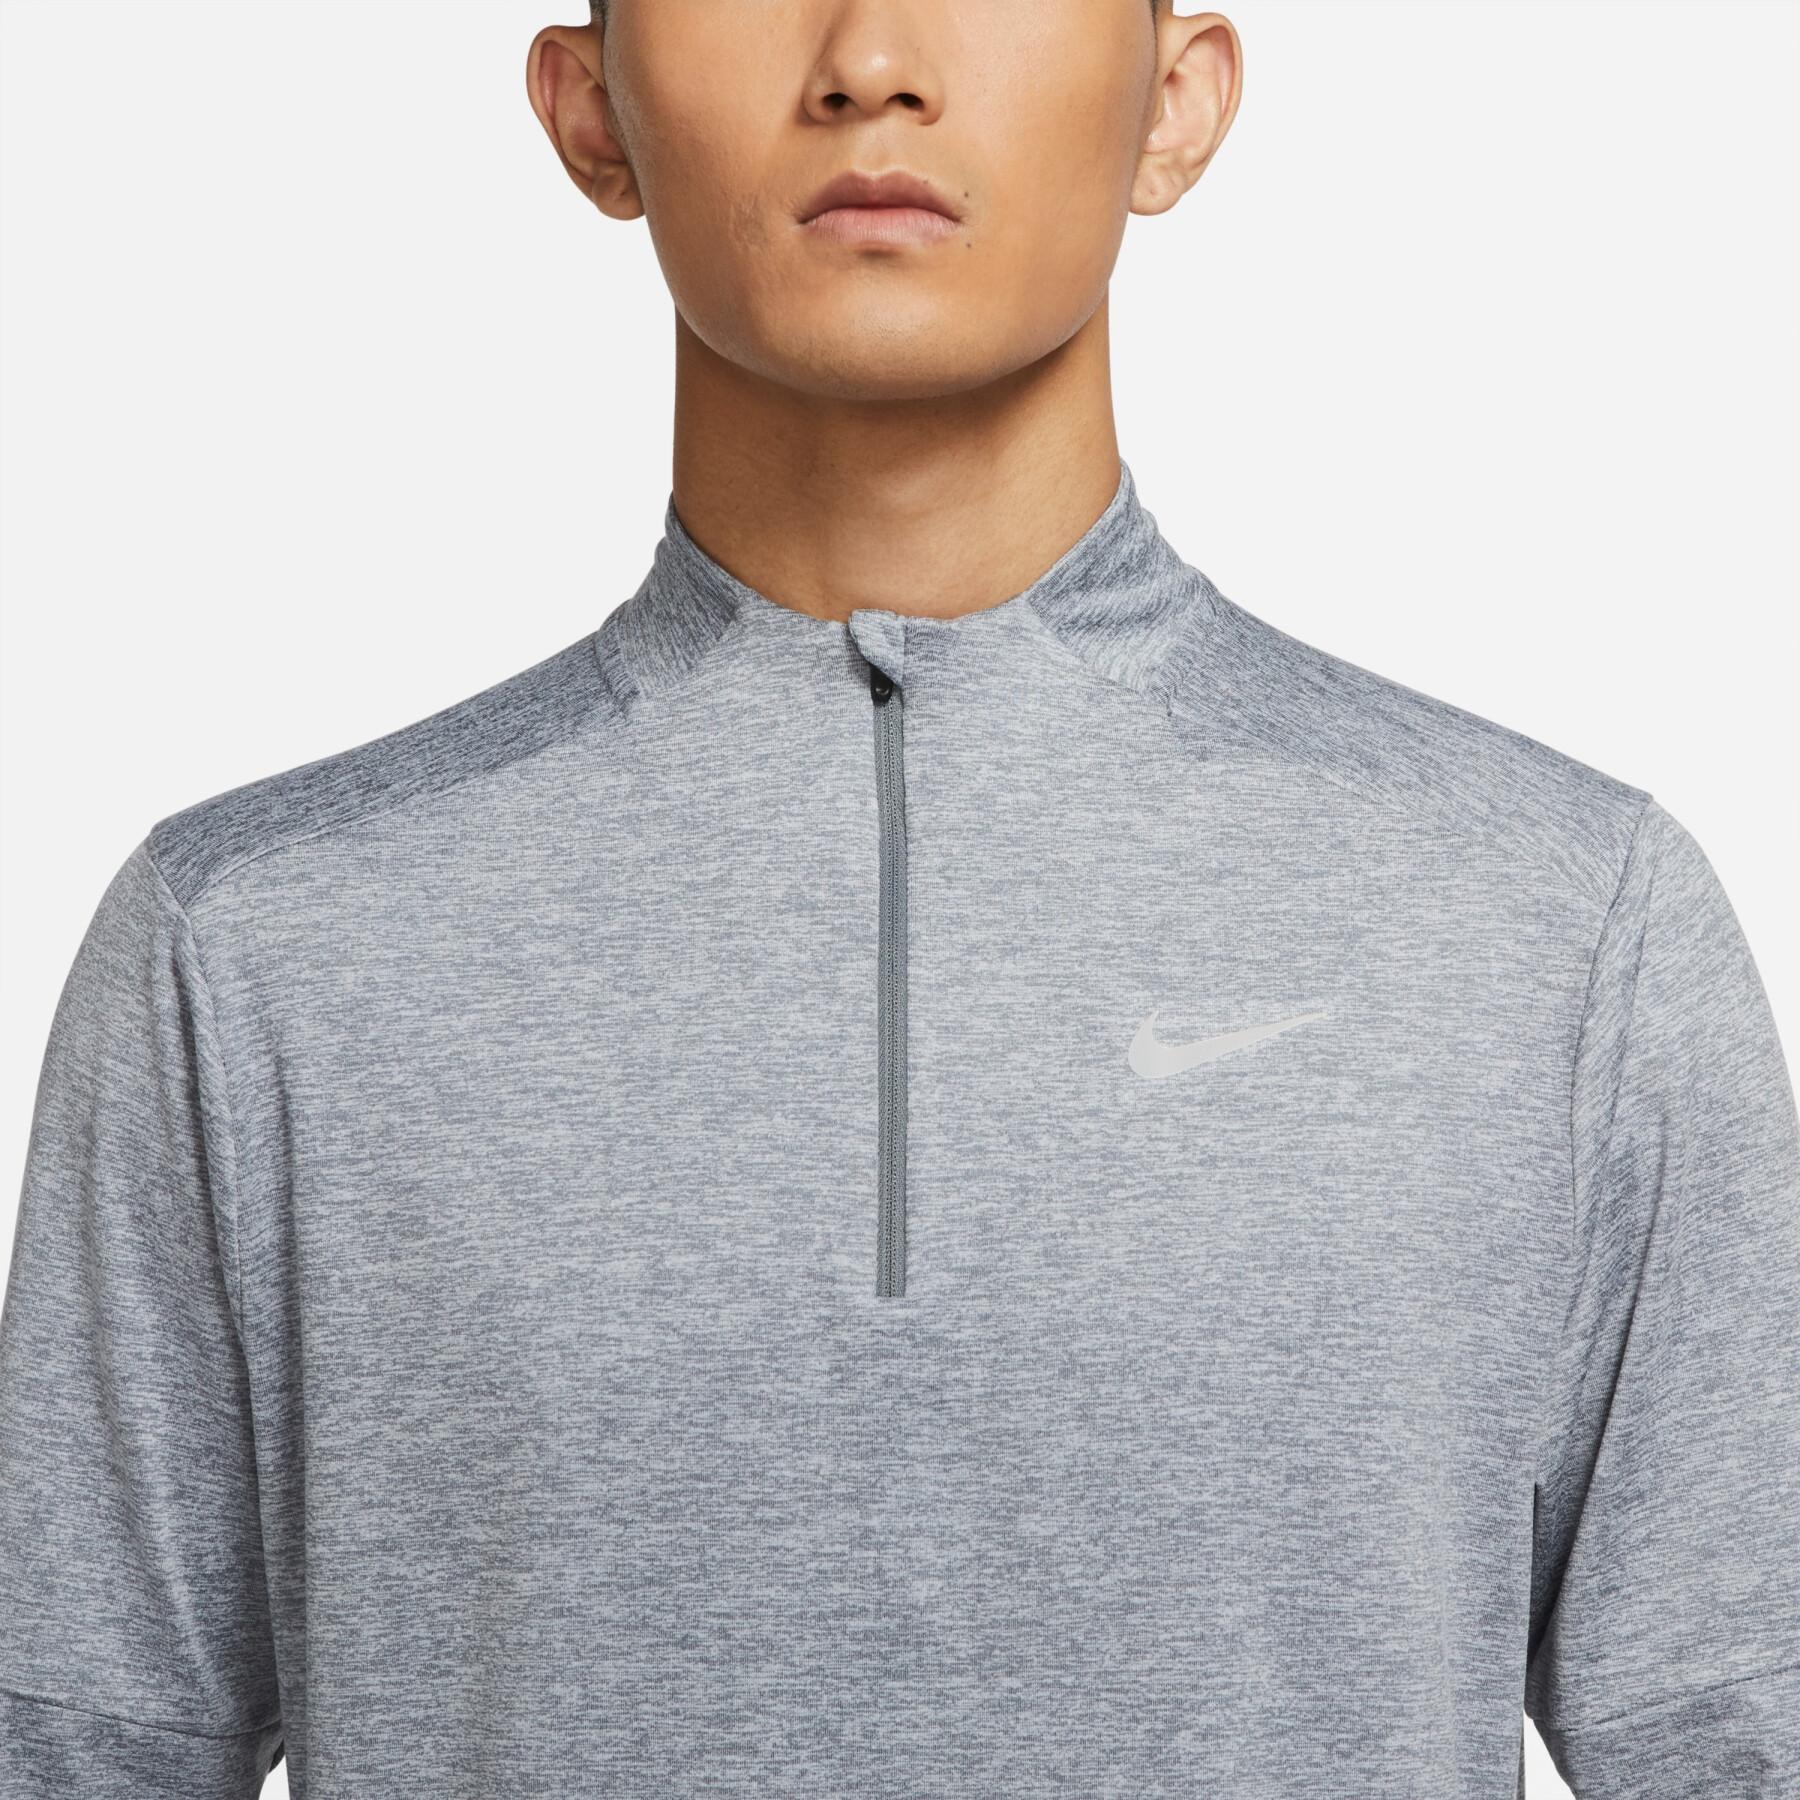 Jacket Nike dynamic fit elmnt top hz